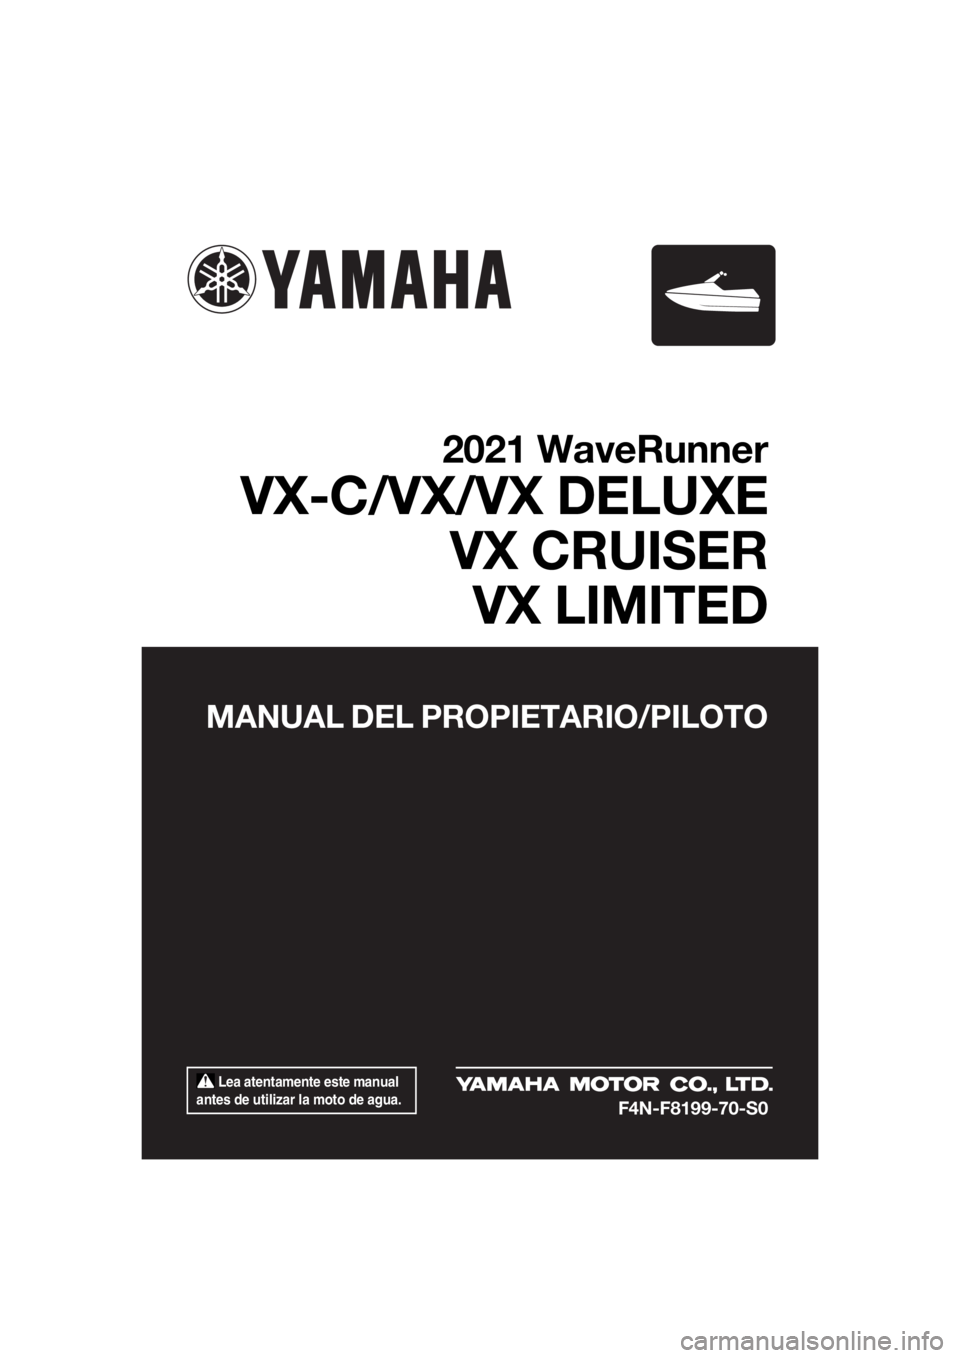 YAMAHA VX 2021  Manuale de Empleo (in Spanish) 